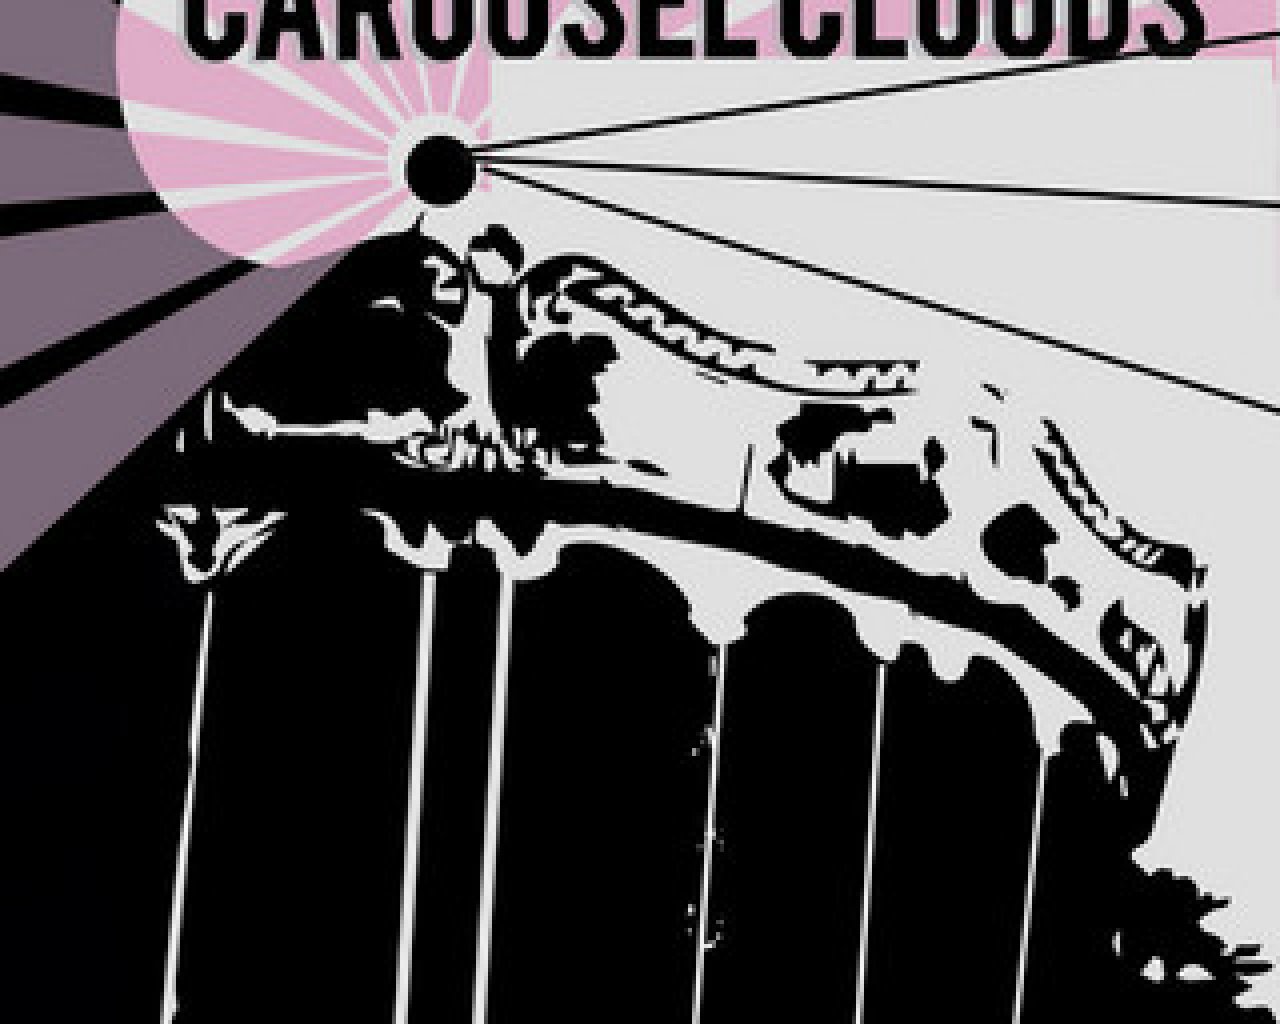 Carousel Clouds